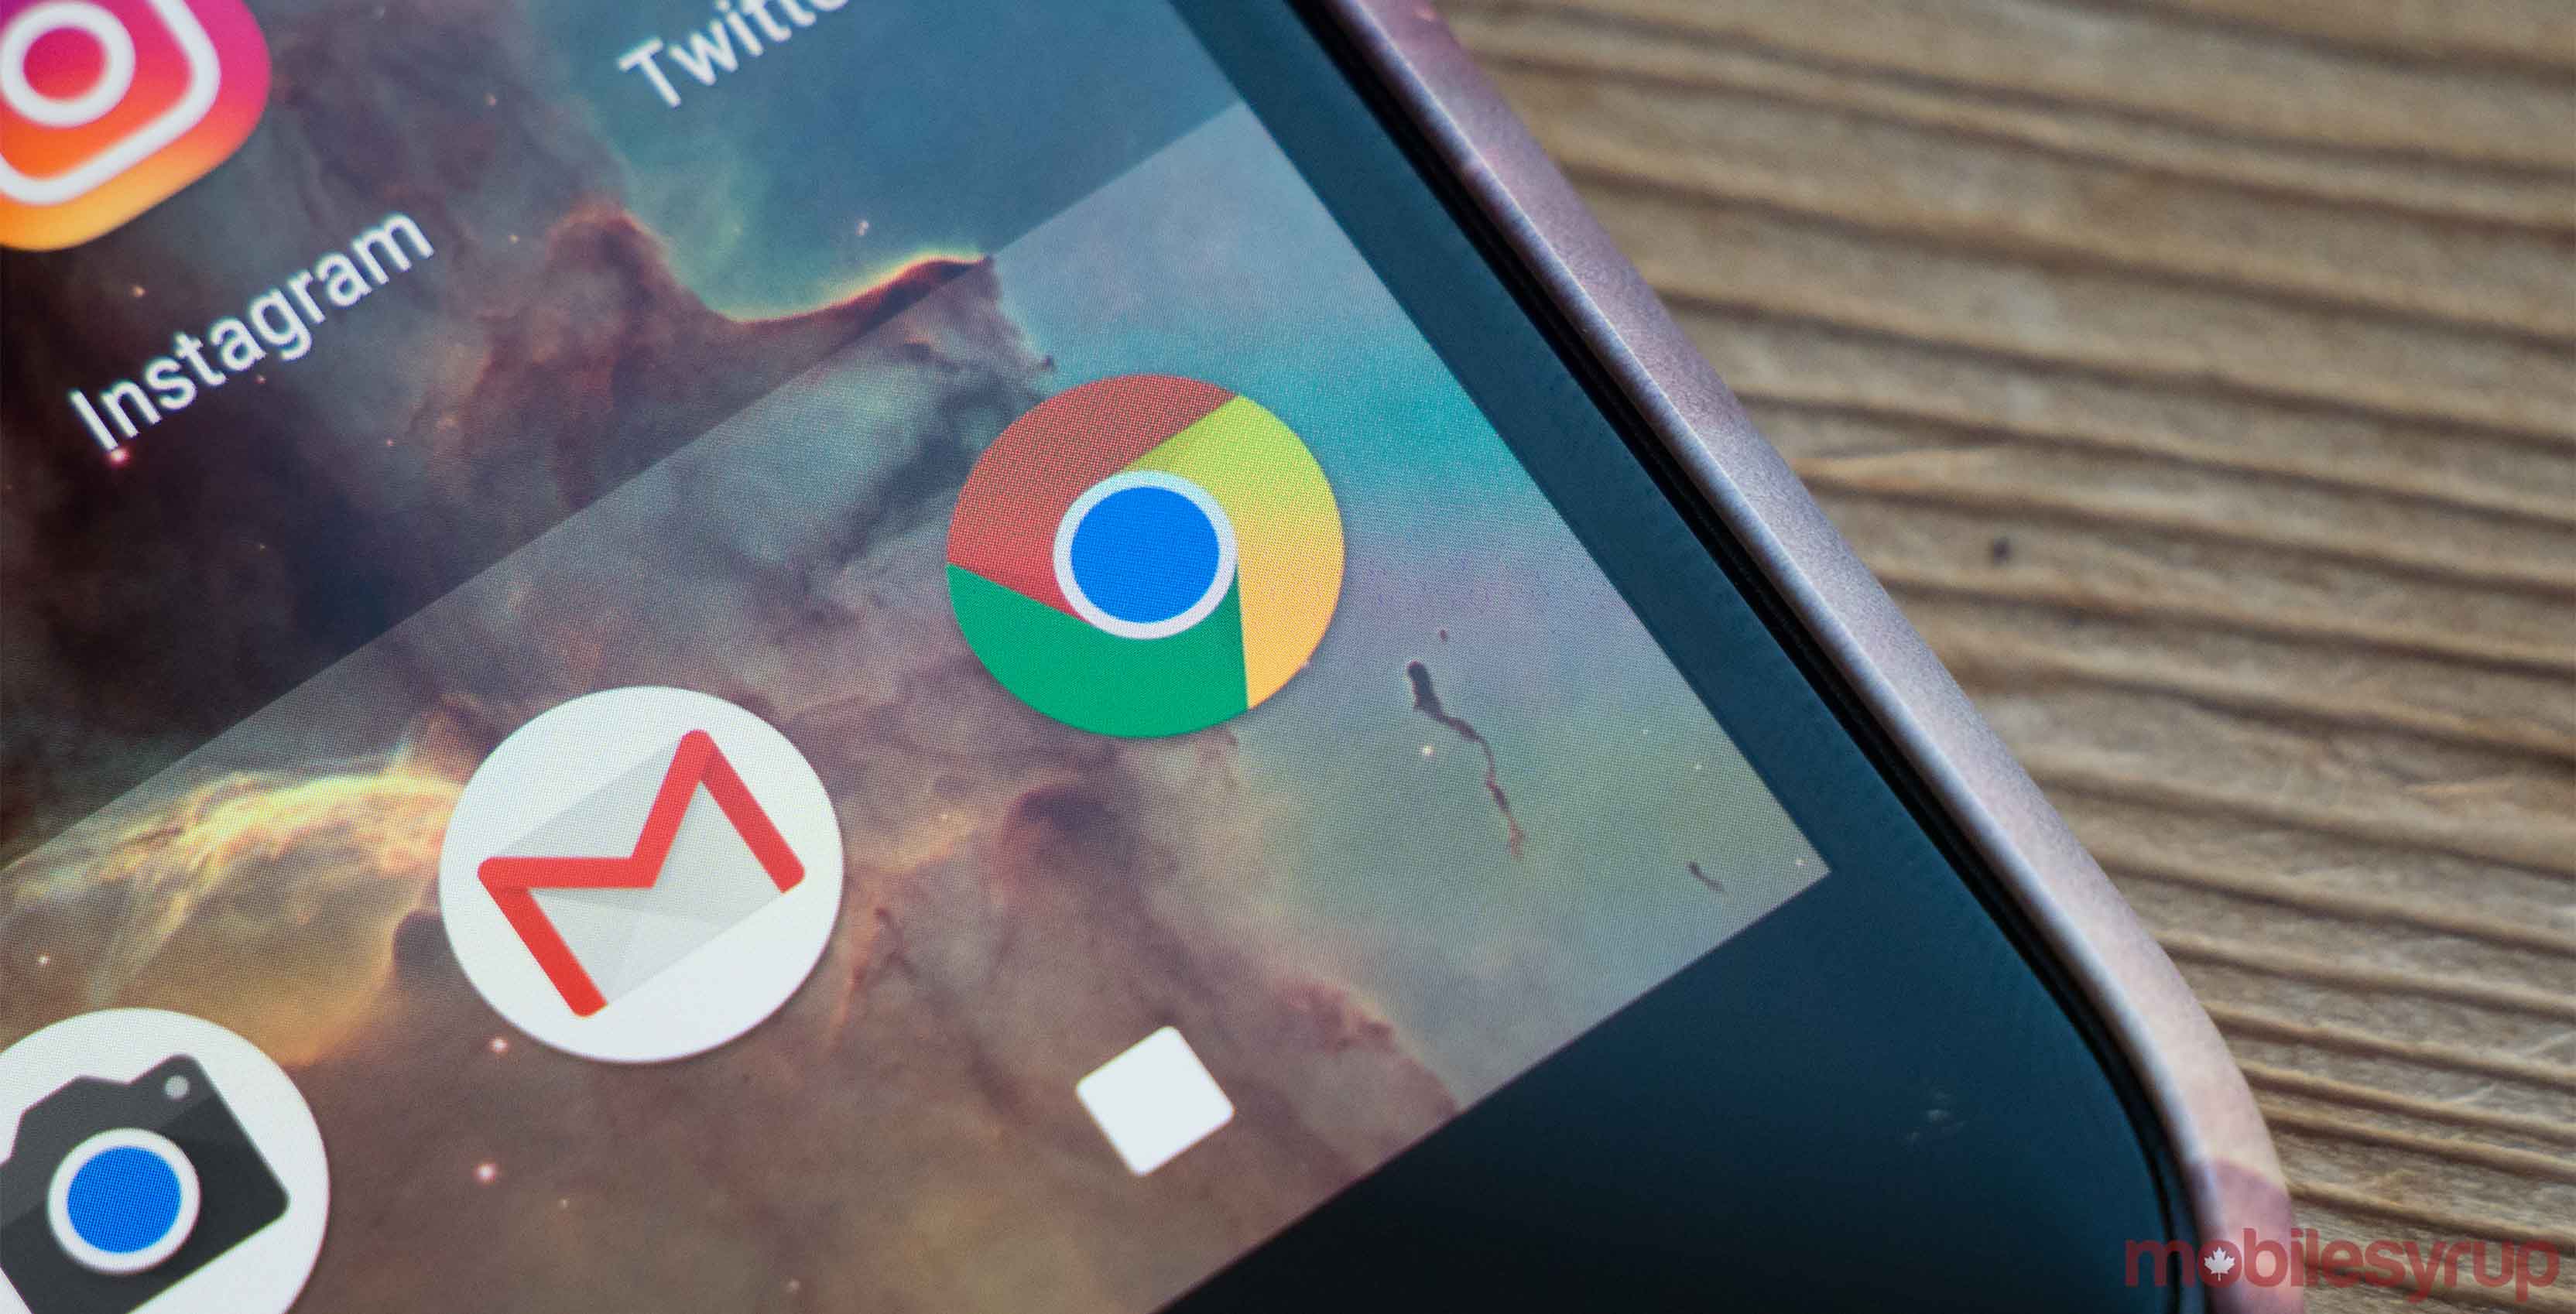 Google Chrome and G-mail app